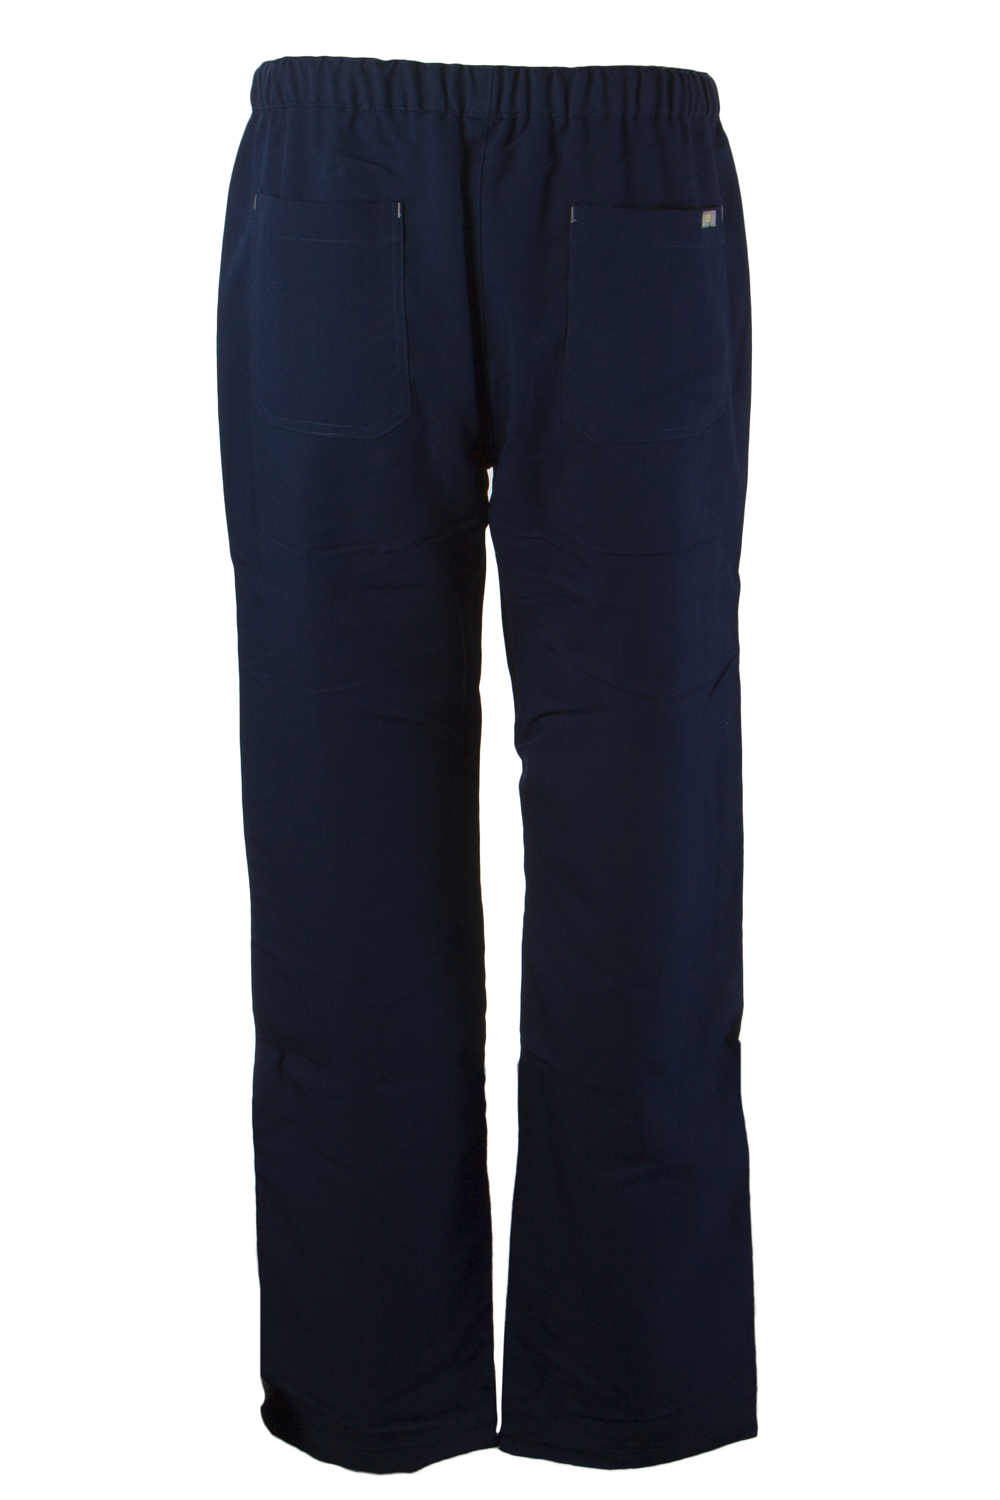 FIGS Men's Eldoret Basic Scrub Pants PM5800 $46 NWT | eBay